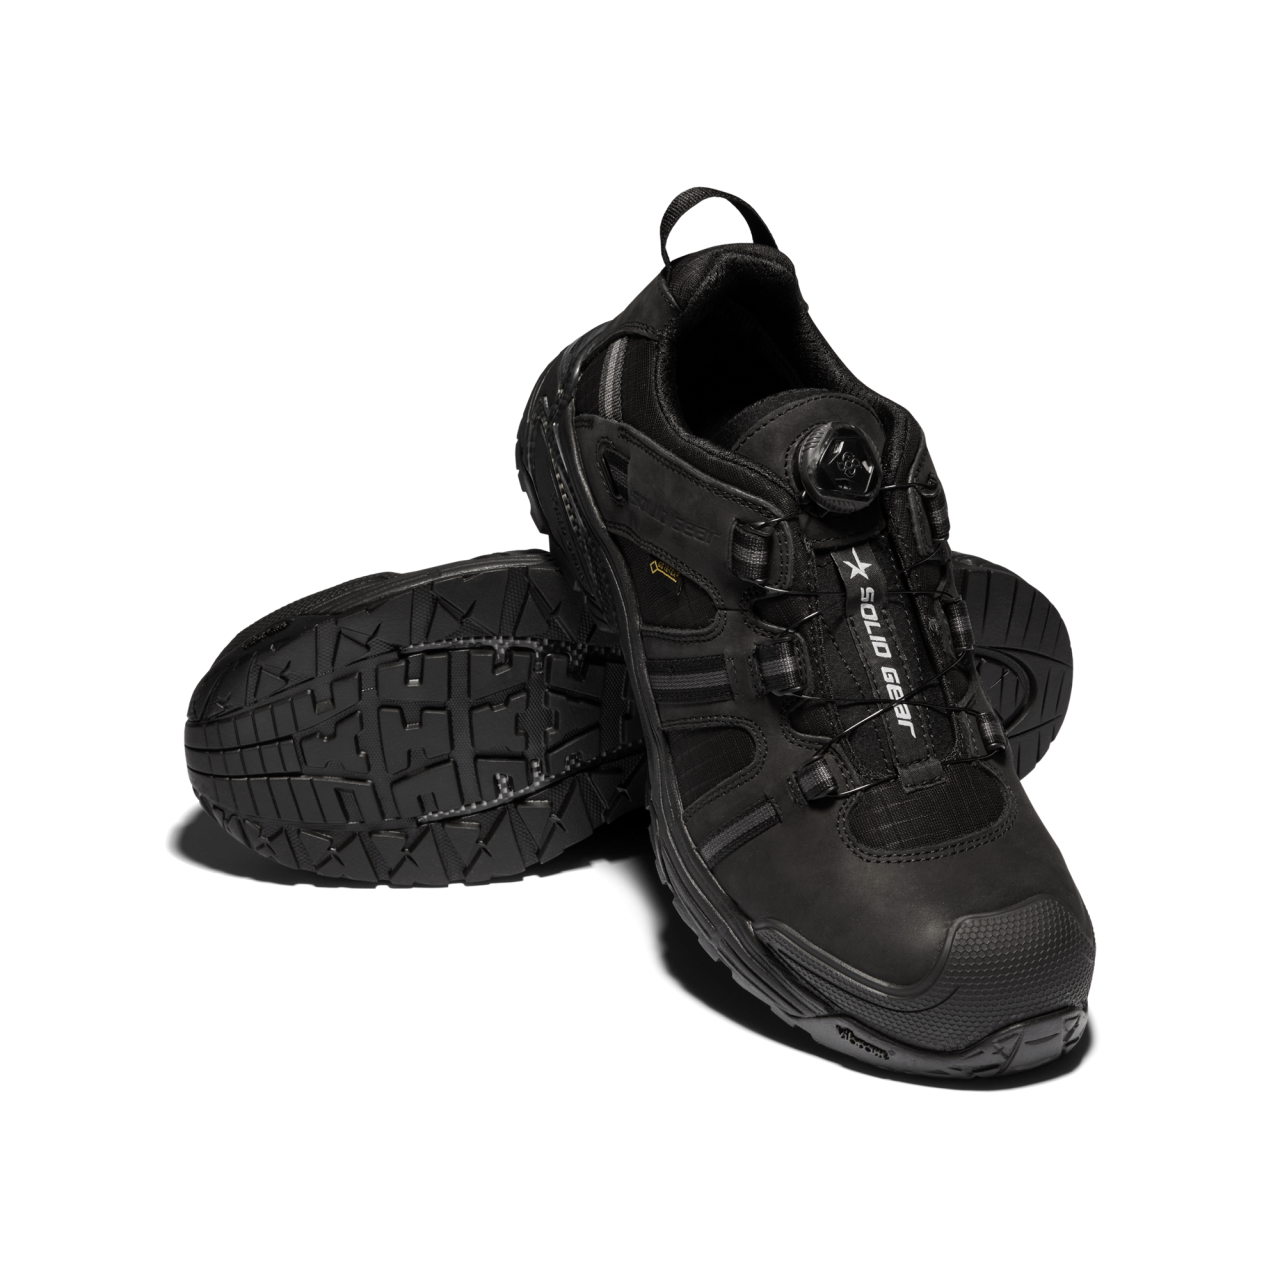 Zapato de seguridad S3 Enforcer GTX talla 43